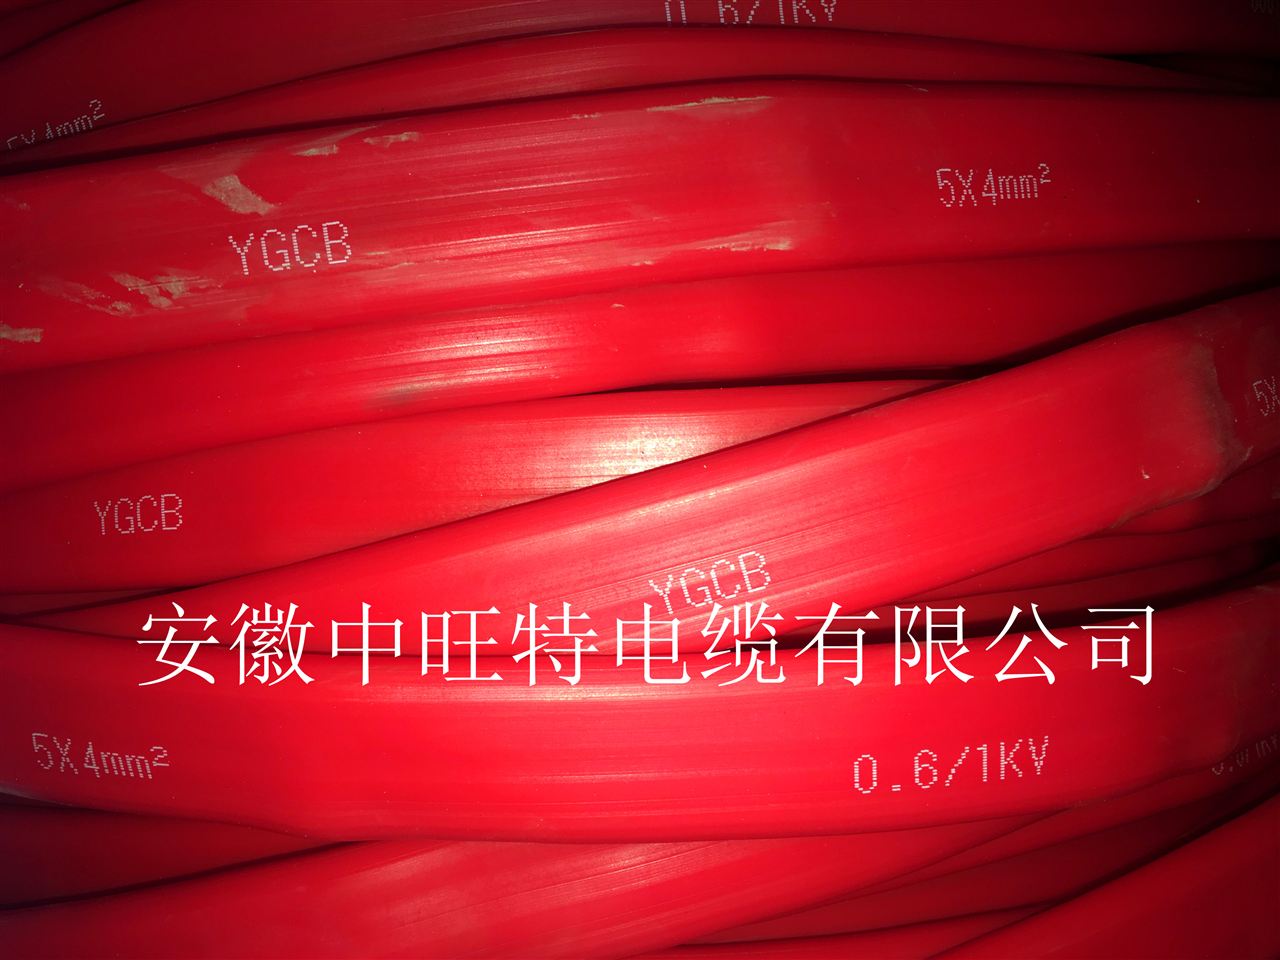 YGCB硅橡胶扁电缆 YGGB高温硅橡胶扁平电缆 YGGB-VFRP YGGB-VFR示例图2